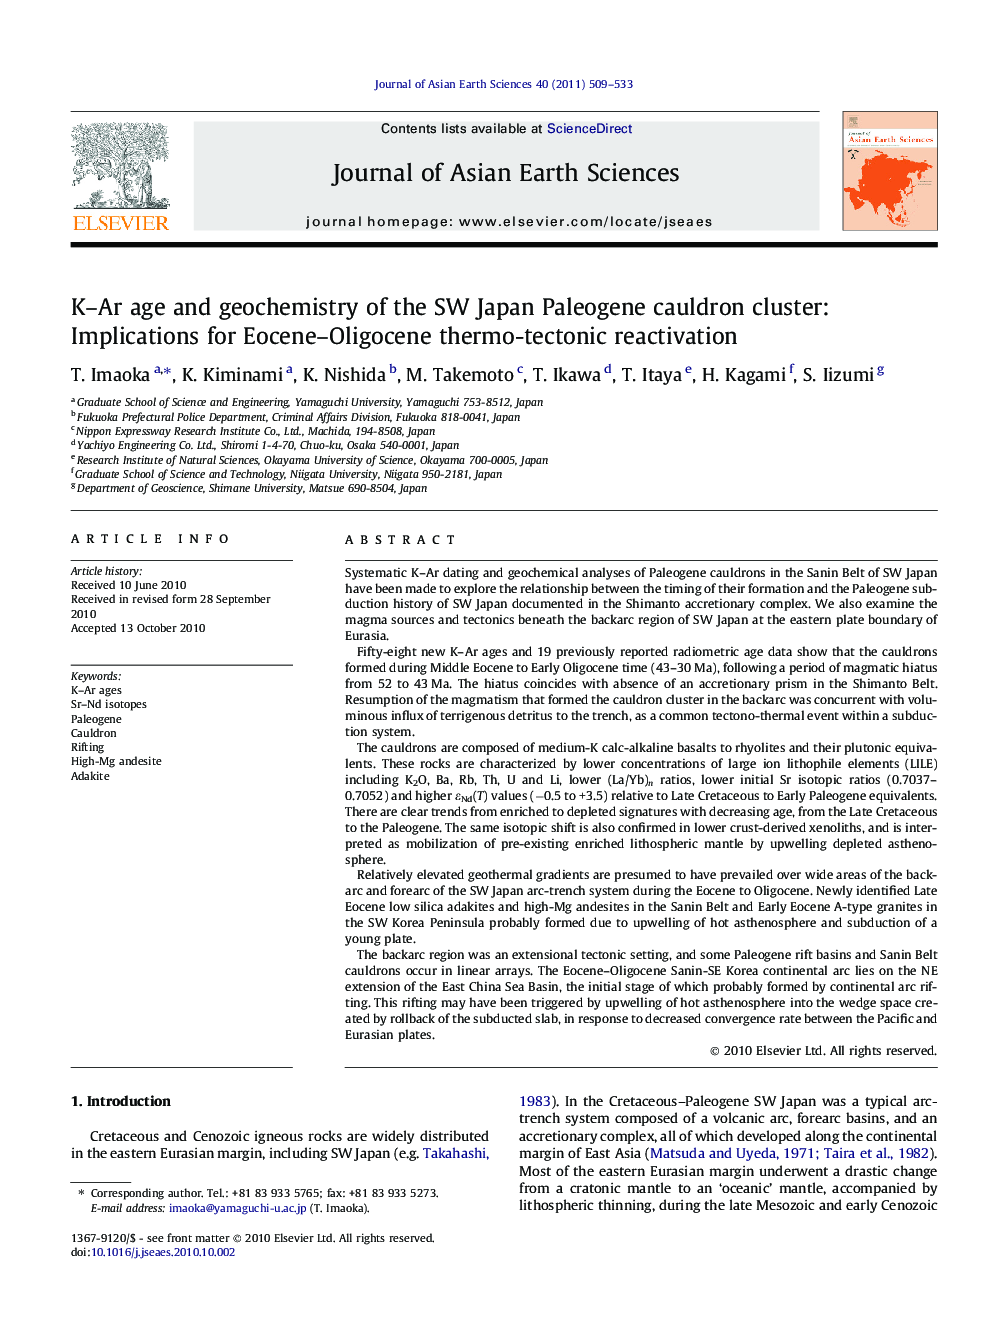 K-Ar age and geochemistry of the SW Japan Paleogene cauldron cluster: Implications for Eocene-Oligocene thermo-tectonic reactivation